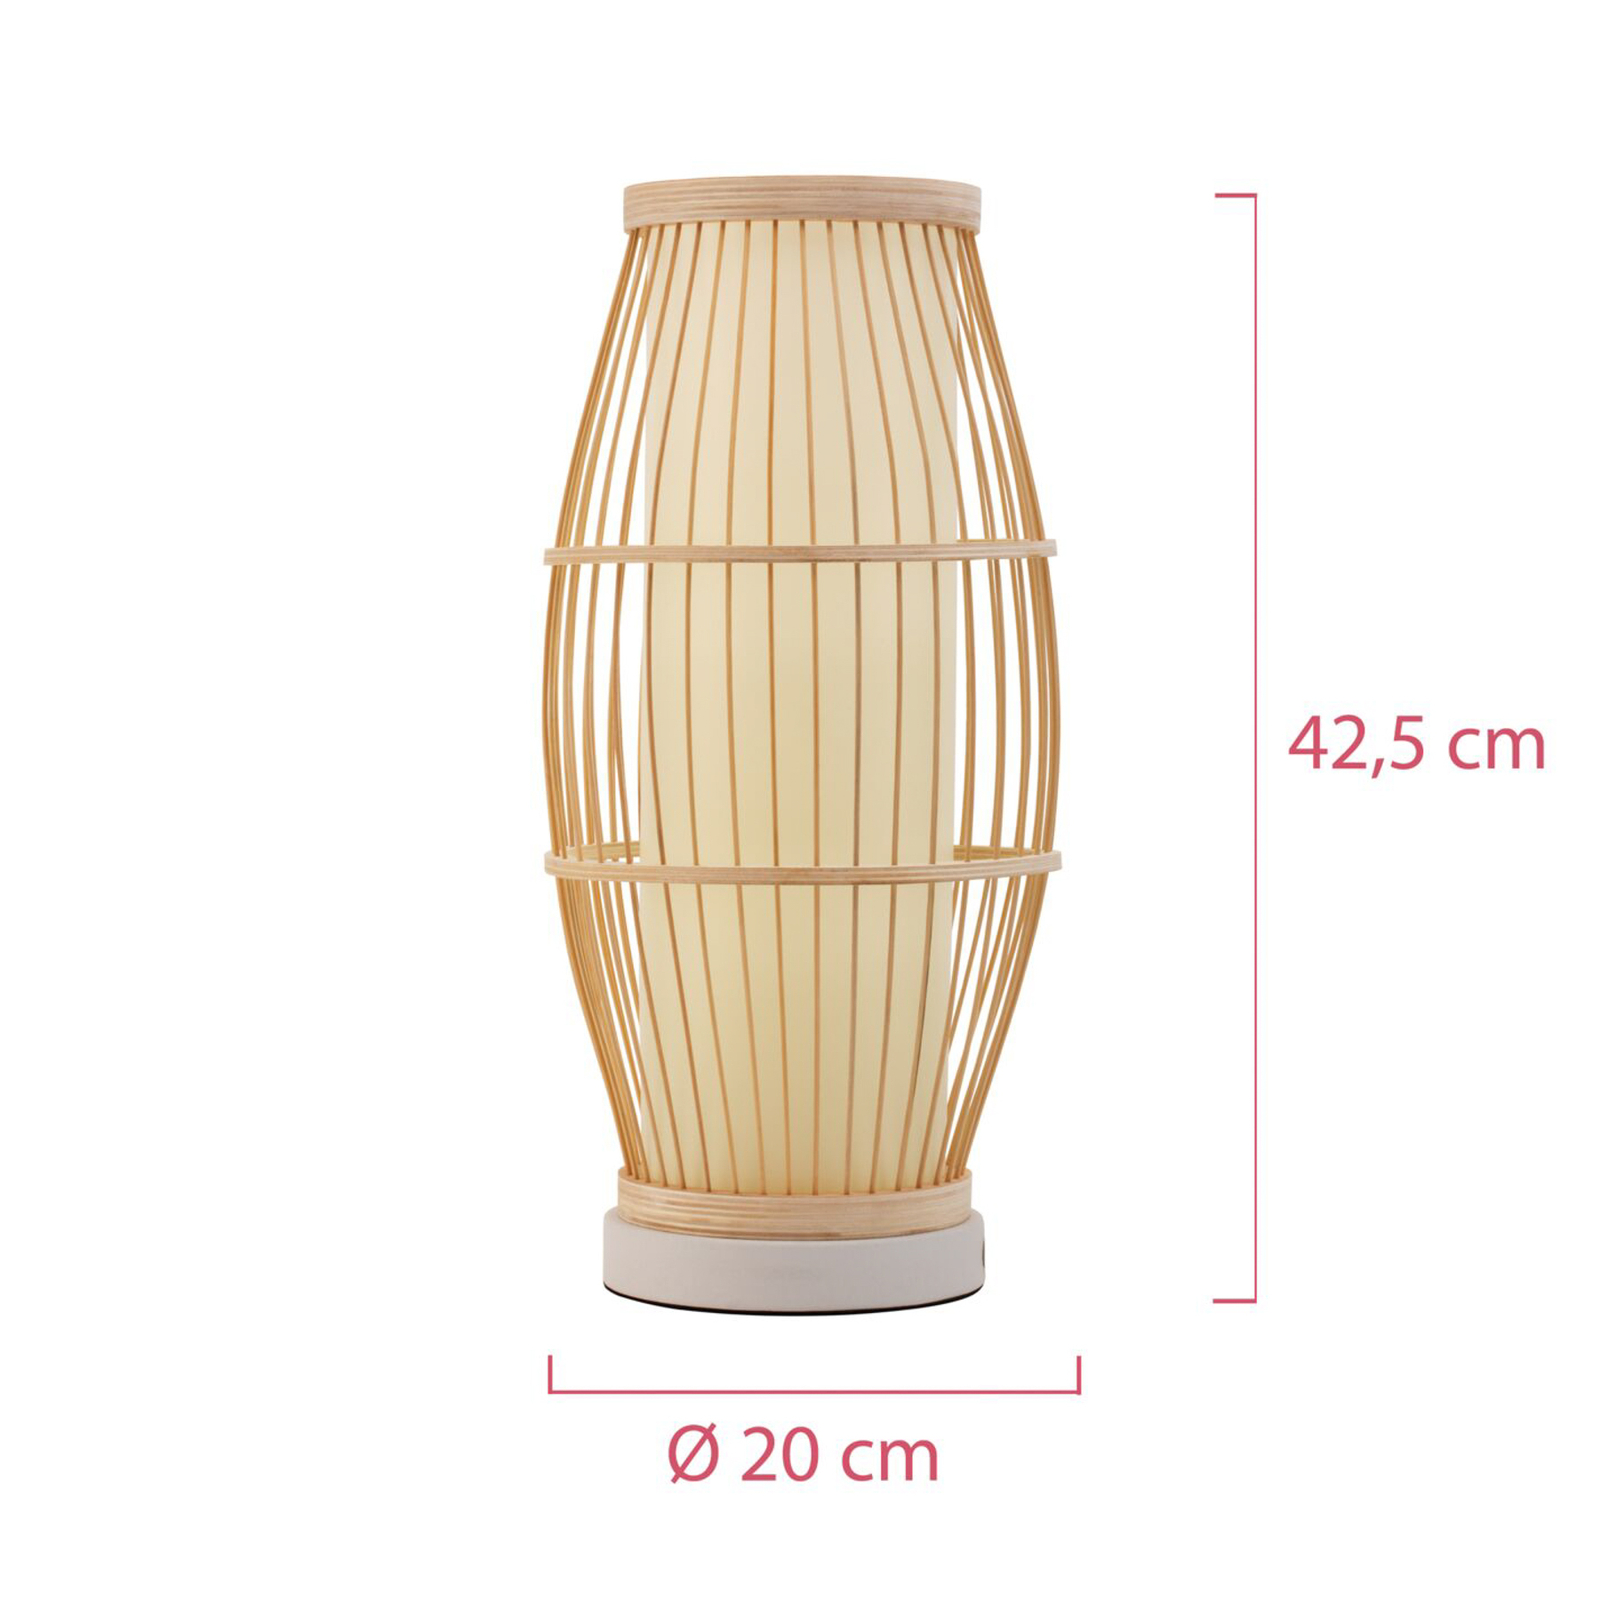 Pauleen Woody Passion stolní lampa z bambusu